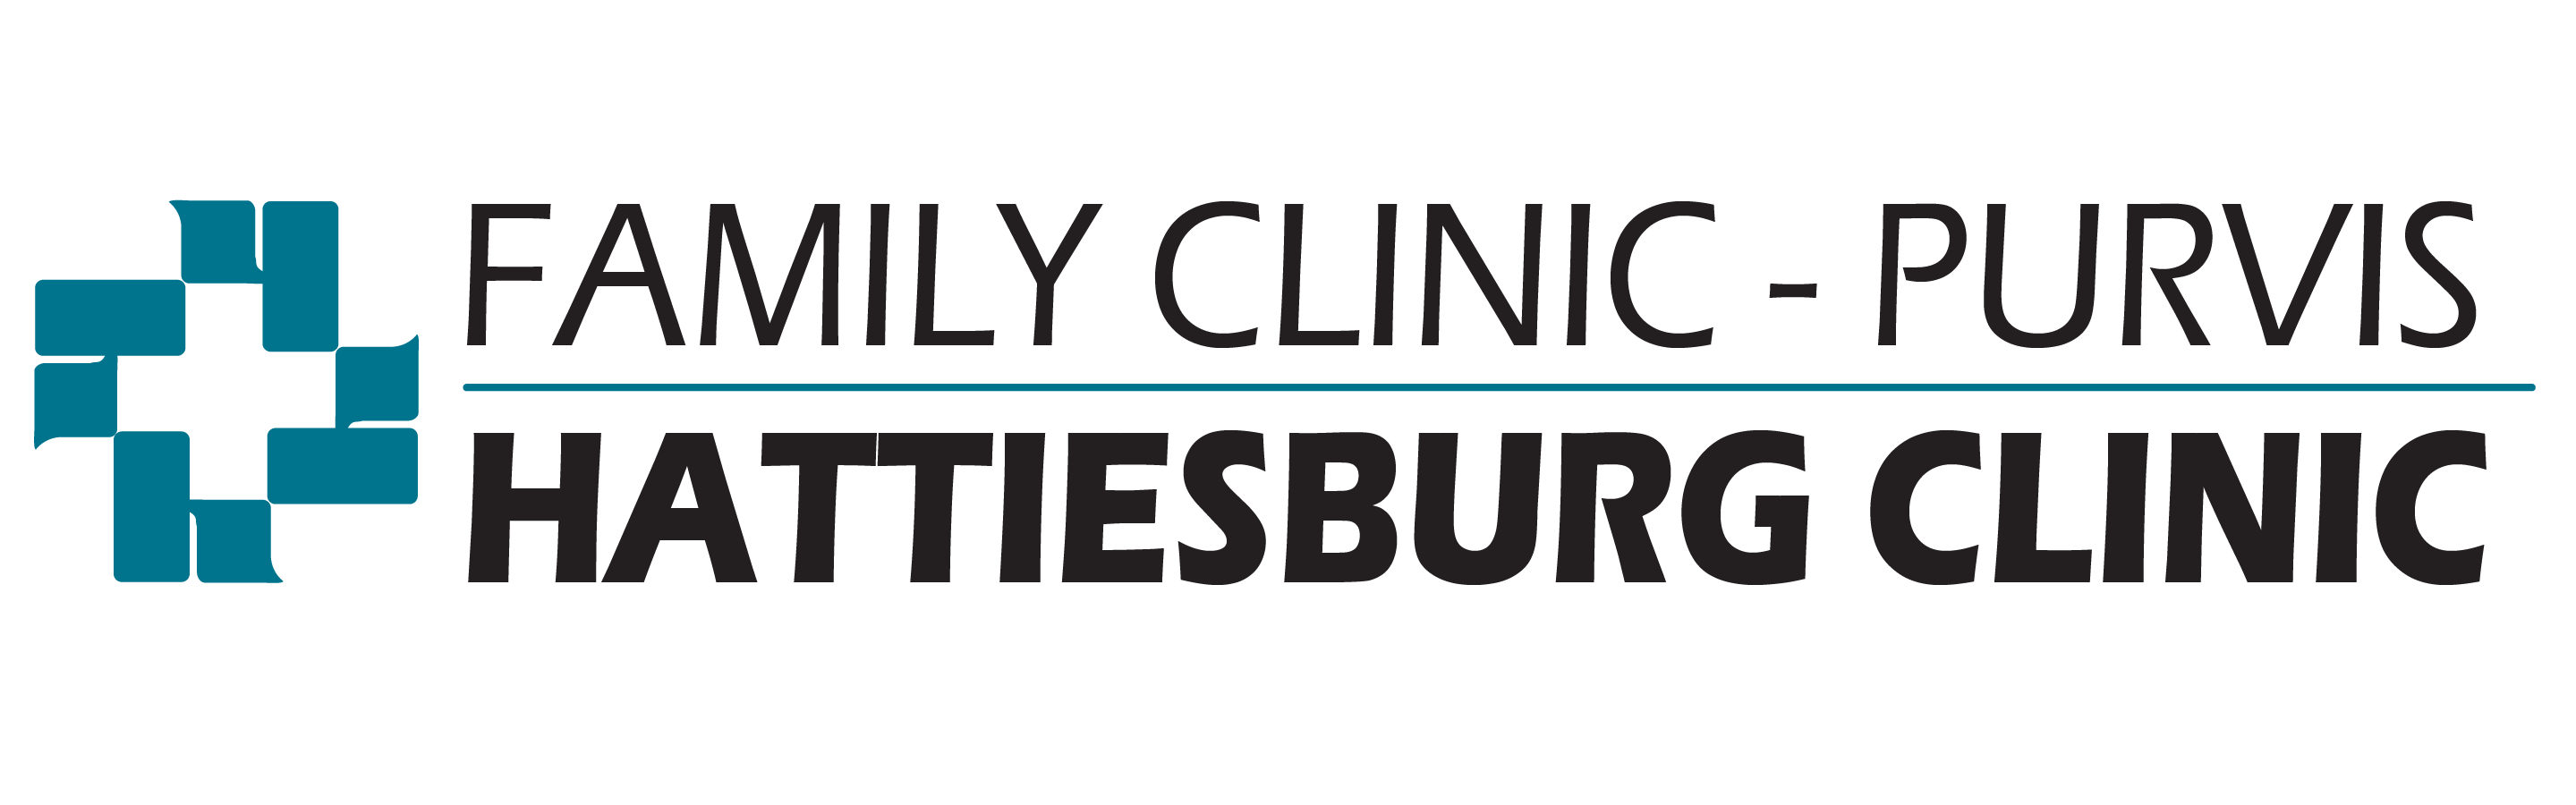 Family Clinic - Purvis logo